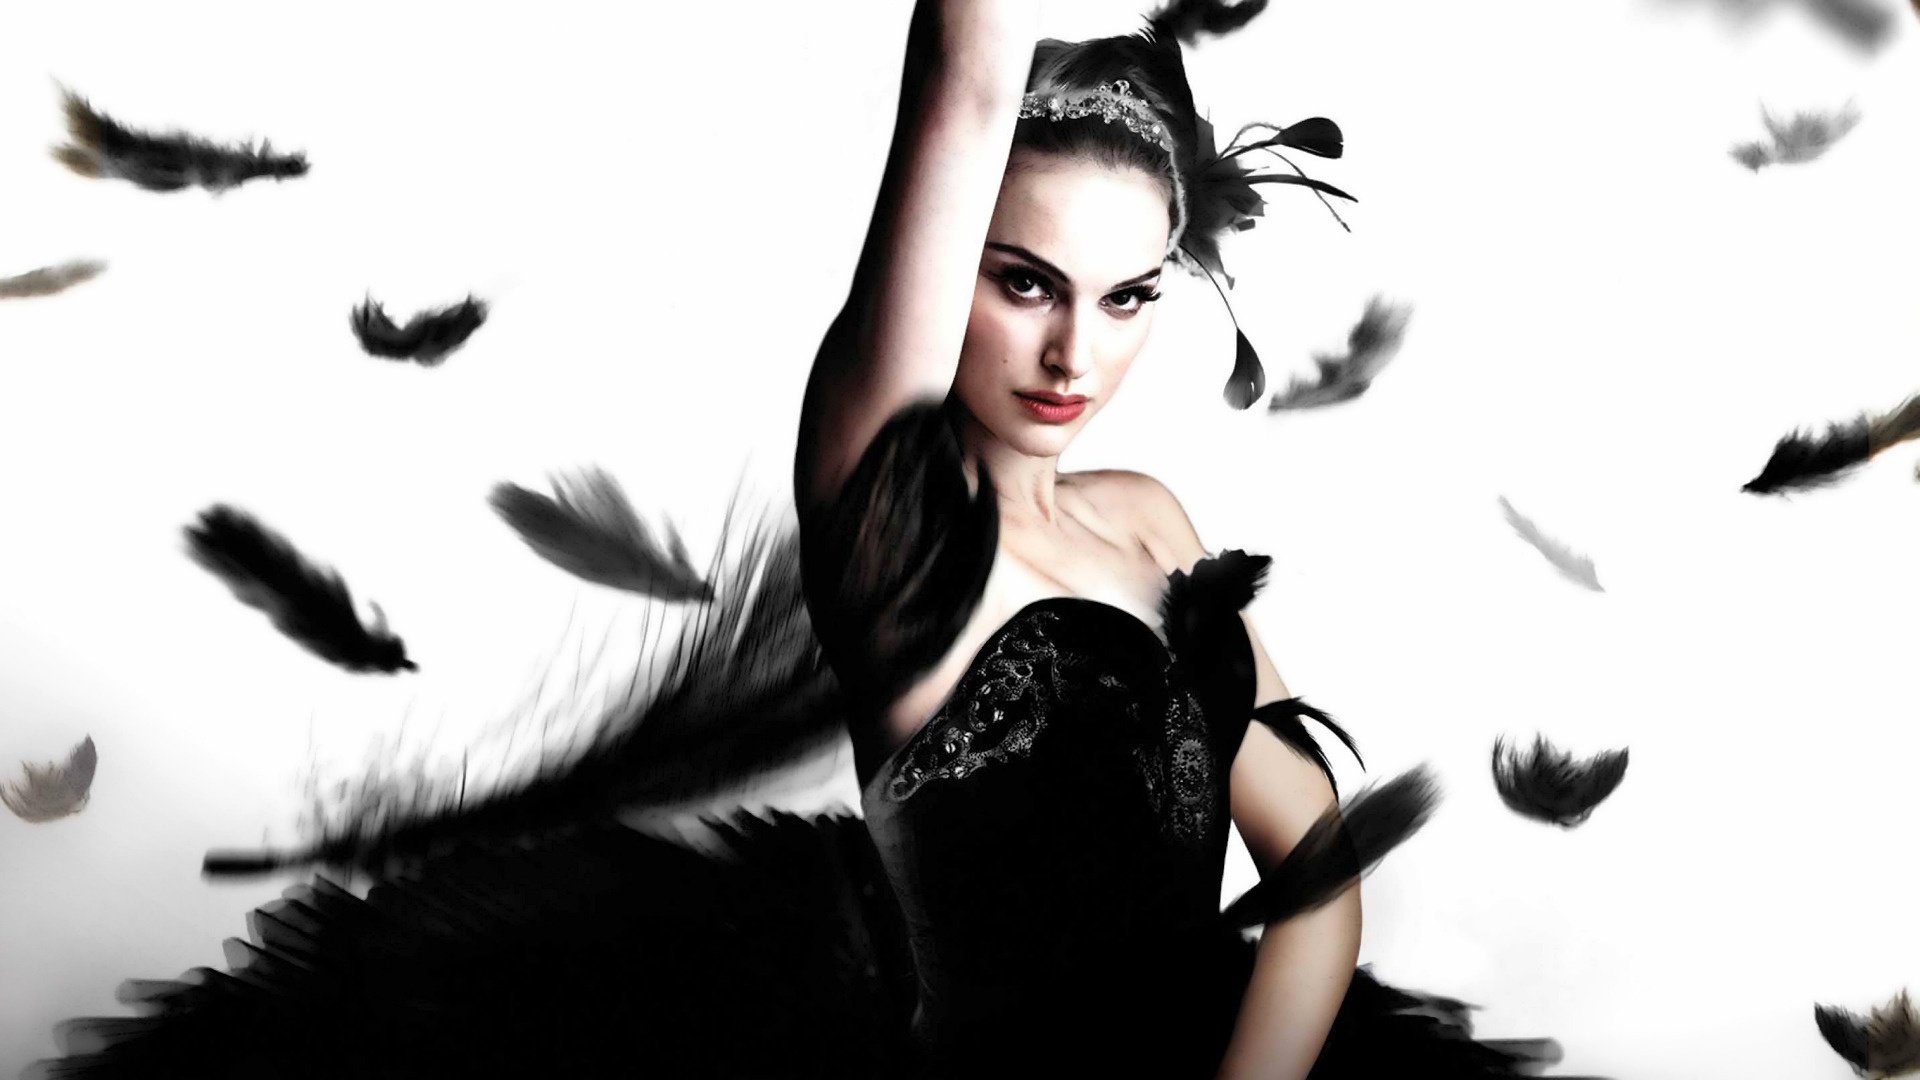 Best Black Swan Movie wallpaper ID:96804 for High Resolution full hd 1080p desktop